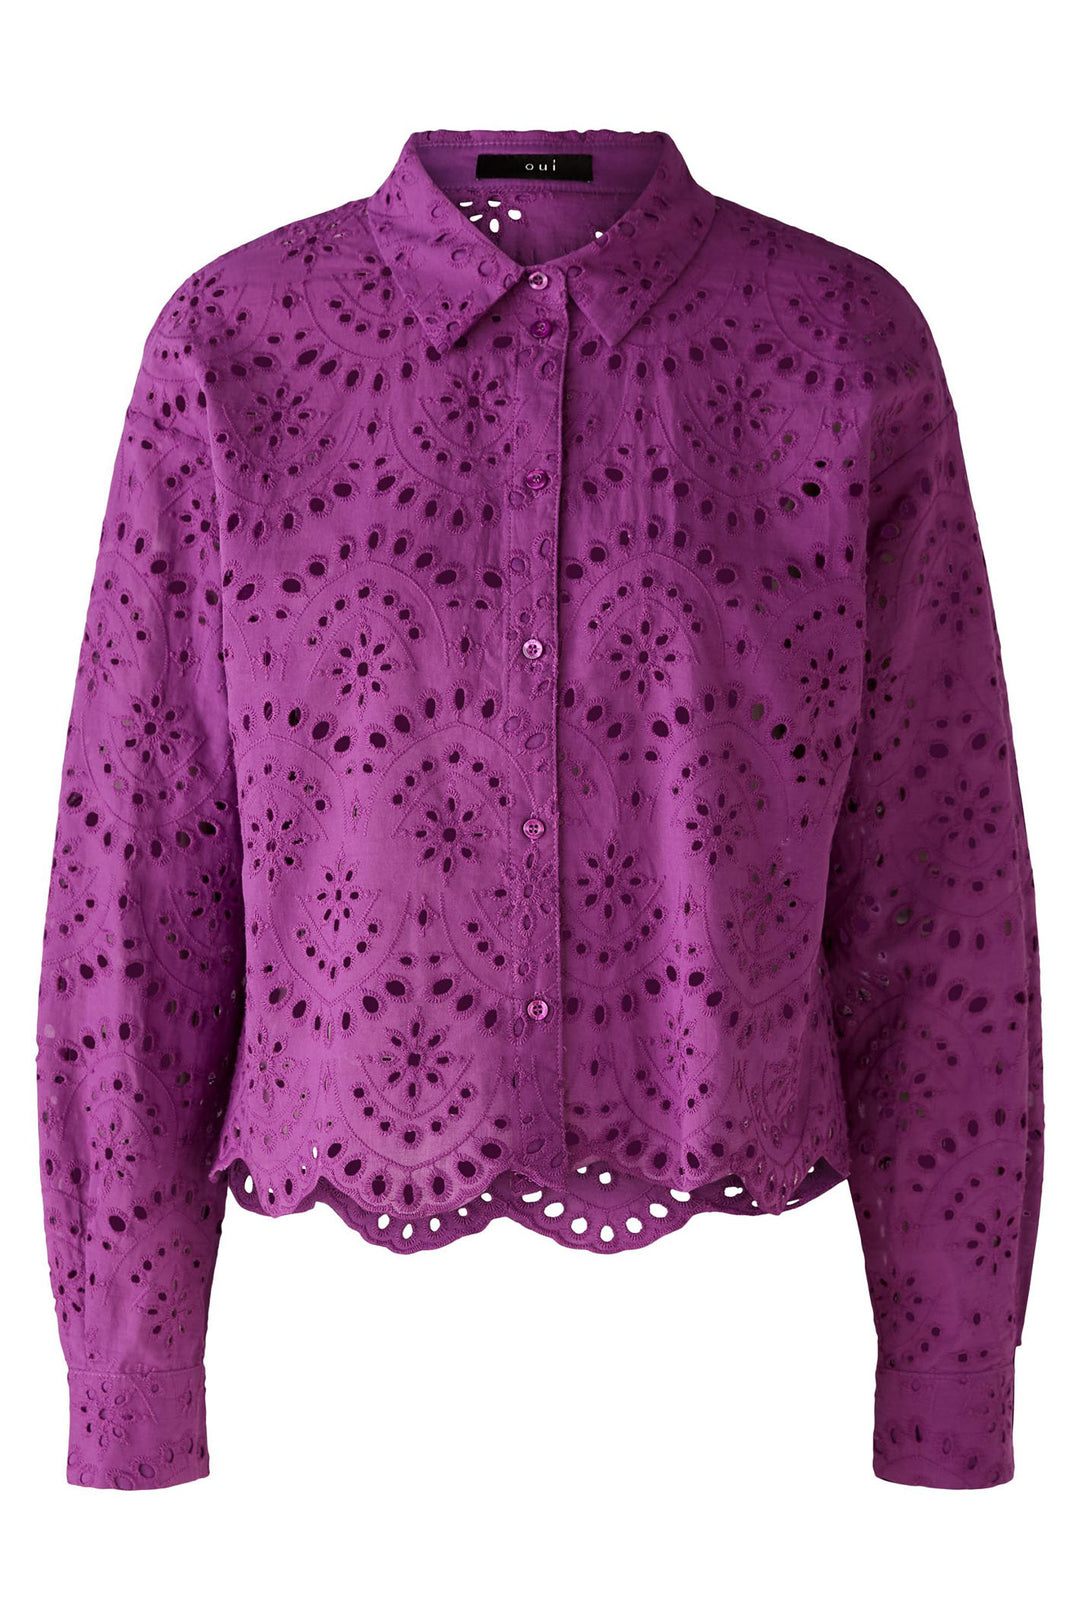 Oui 86772 Sparkling Grape Purple Broderie Anglaise Blouse - Shirley Allum Boutique